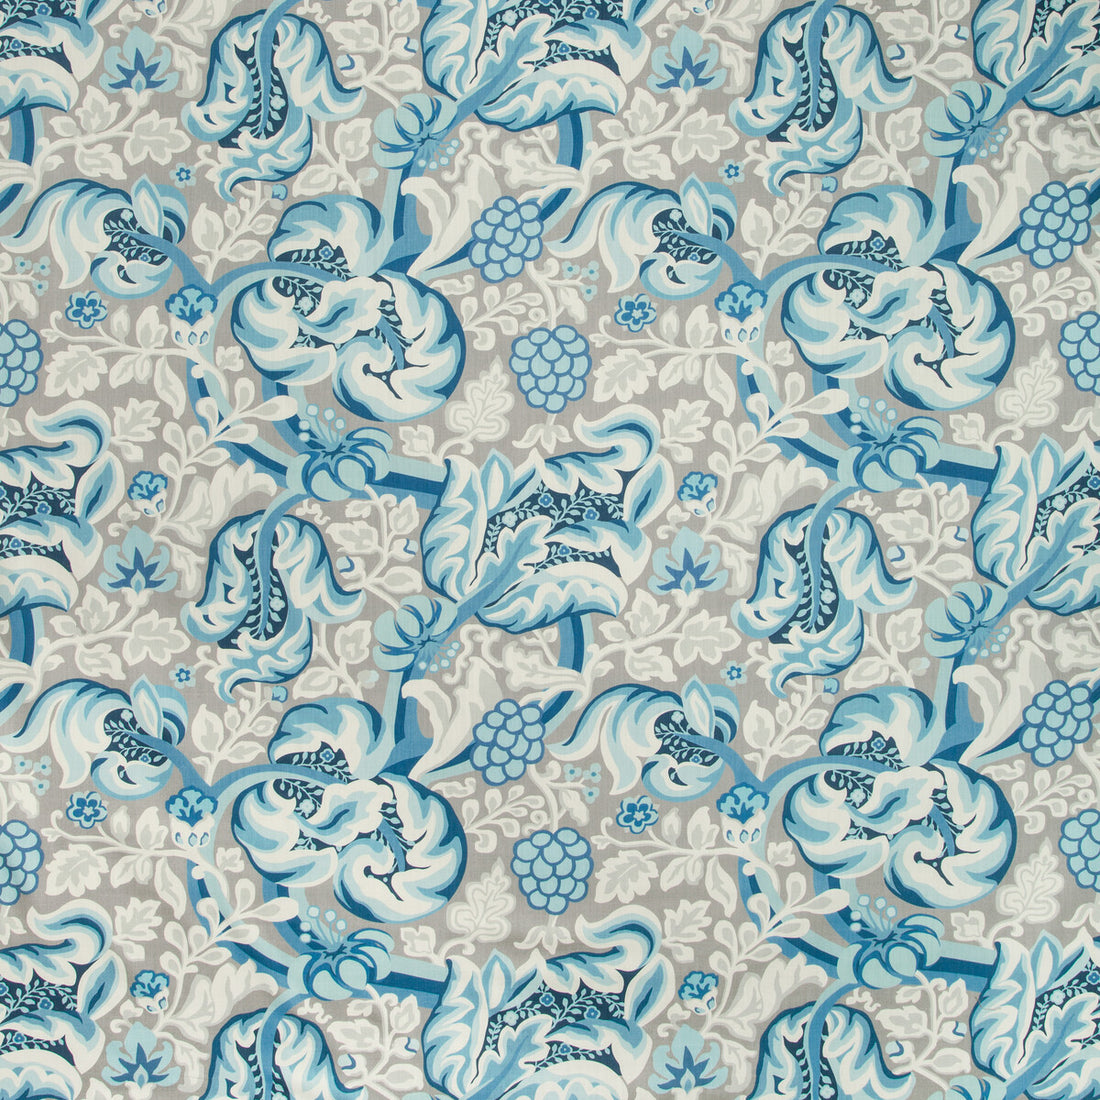 Hullabaloo fabric in atlantic color - pattern HULLABALOO.15.0 - by Kravet Basics in the Bermuda collection